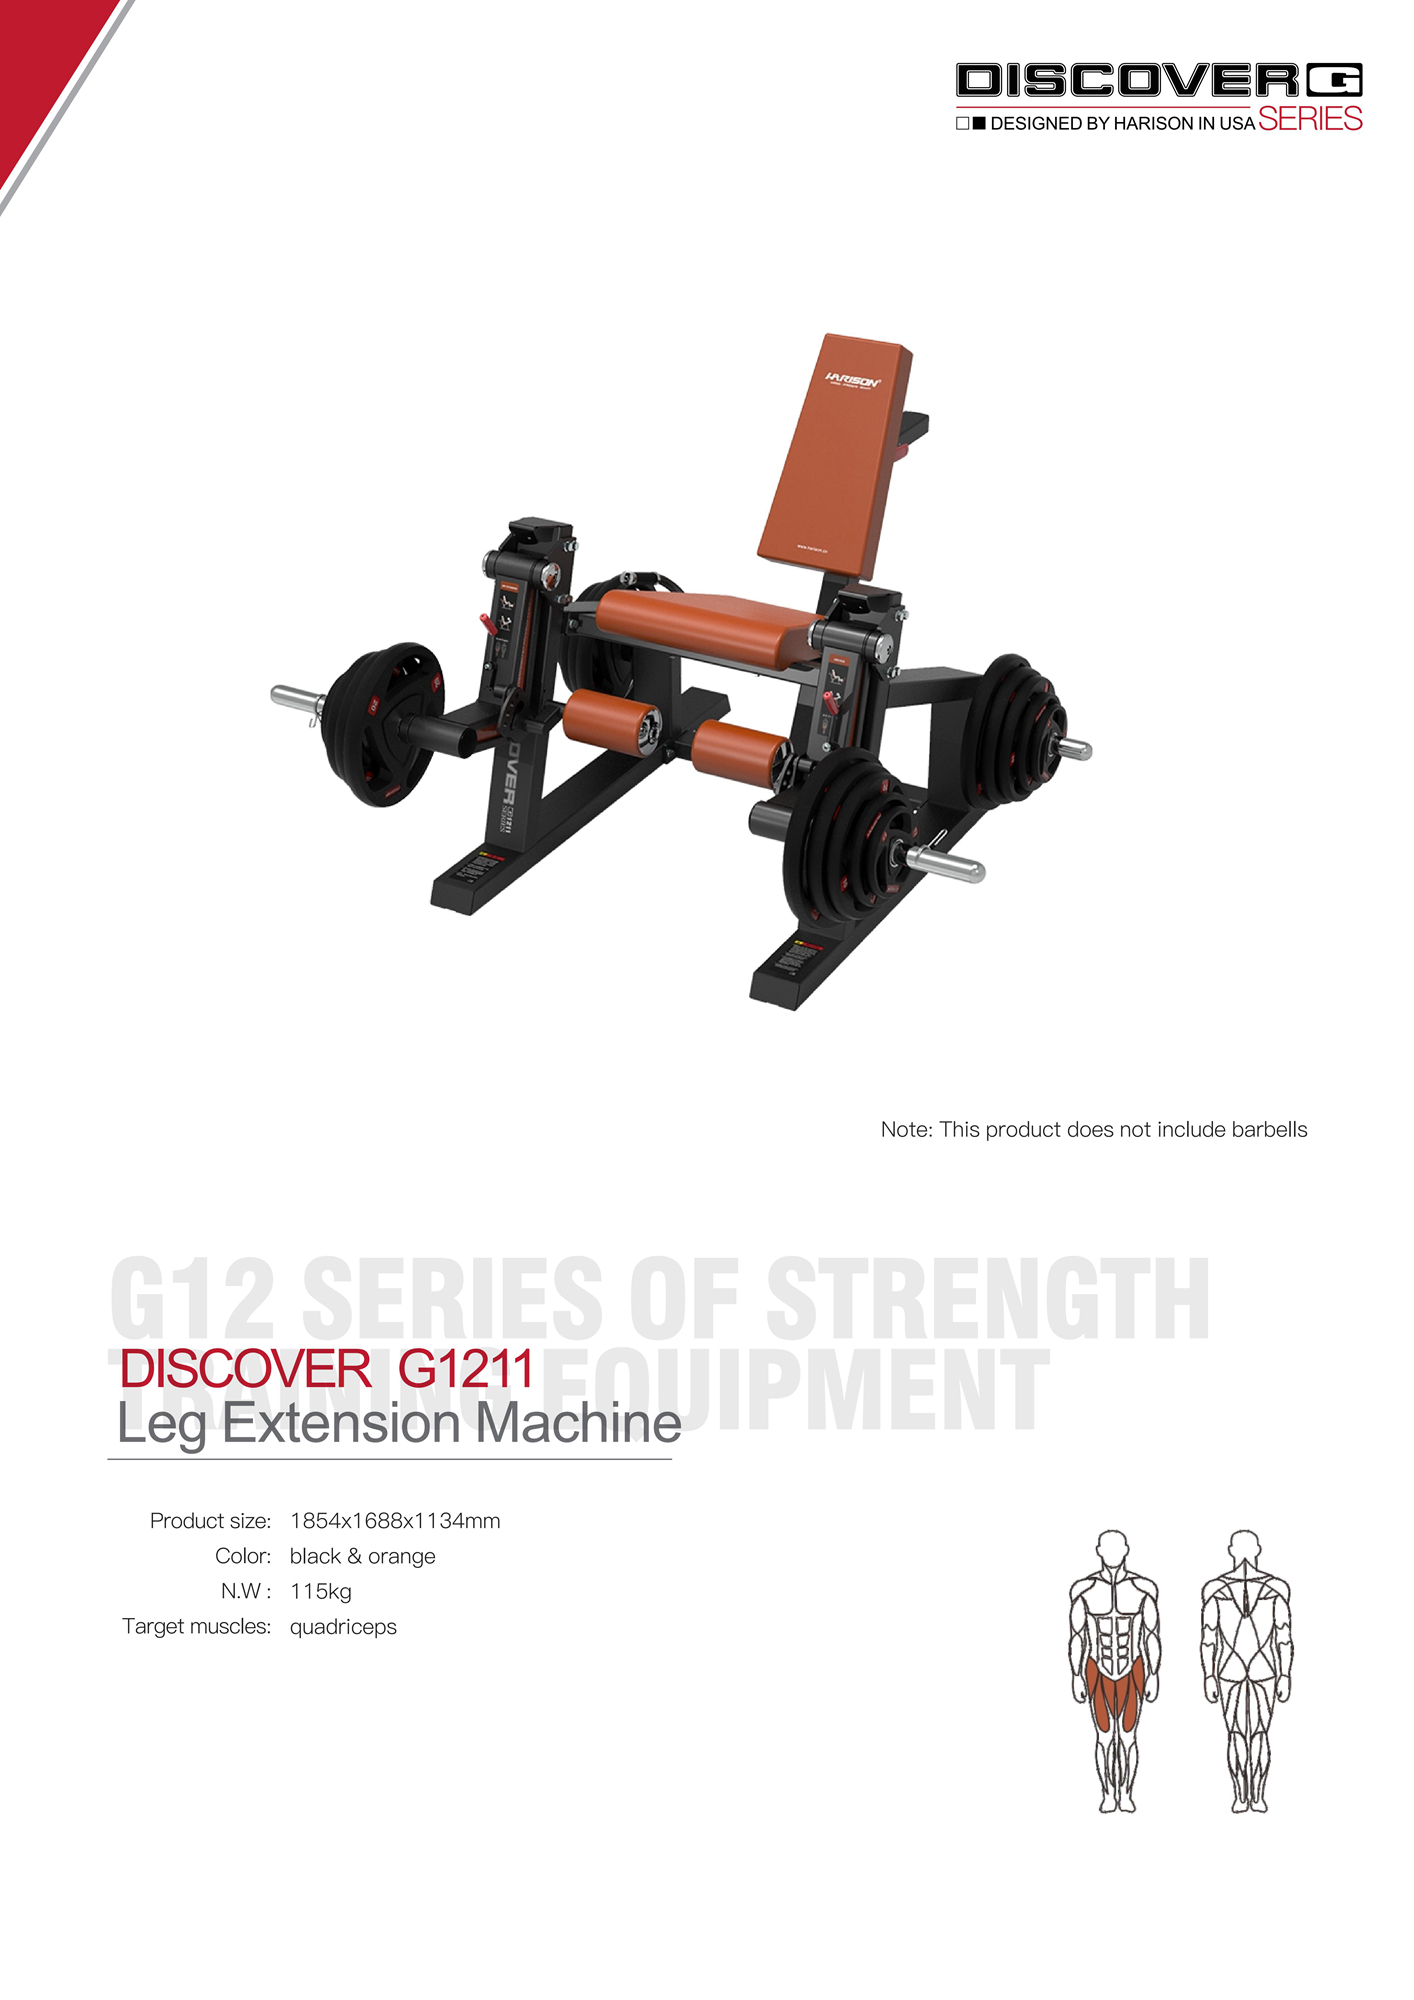 DISCOVER G1211 Leg Extension Machine